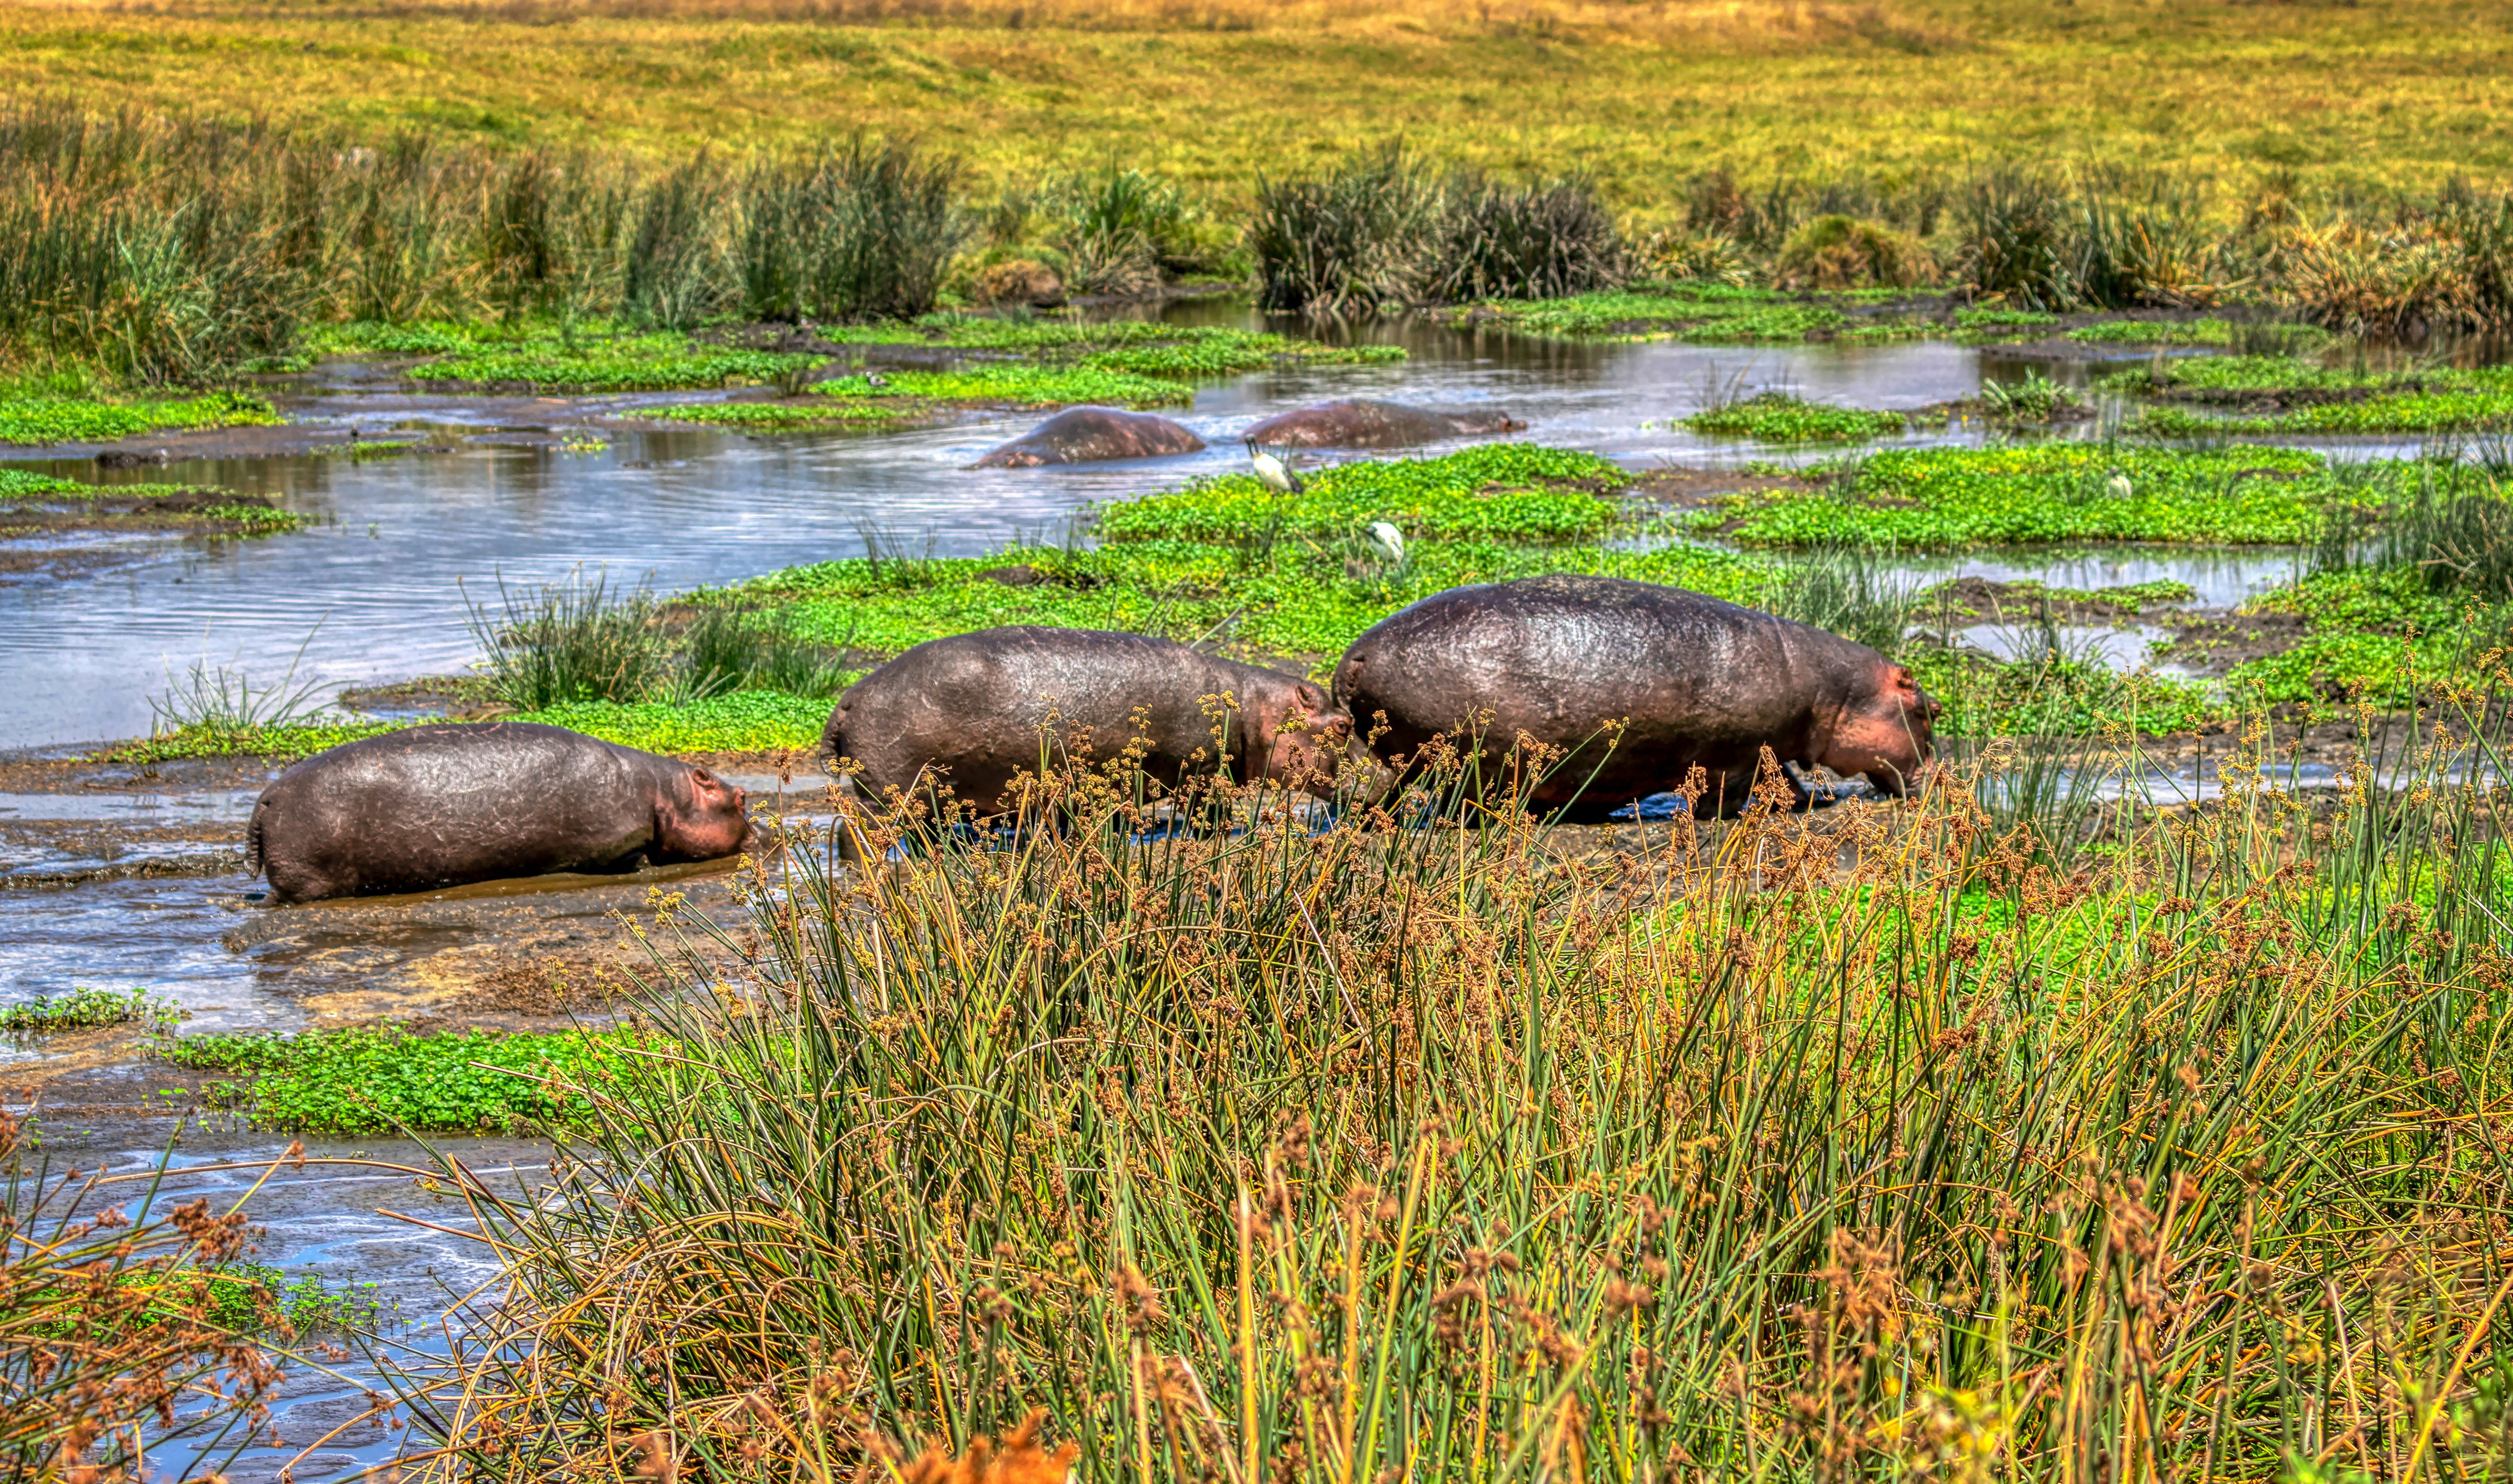 brown rhinoceros on green grass field near river during daytime